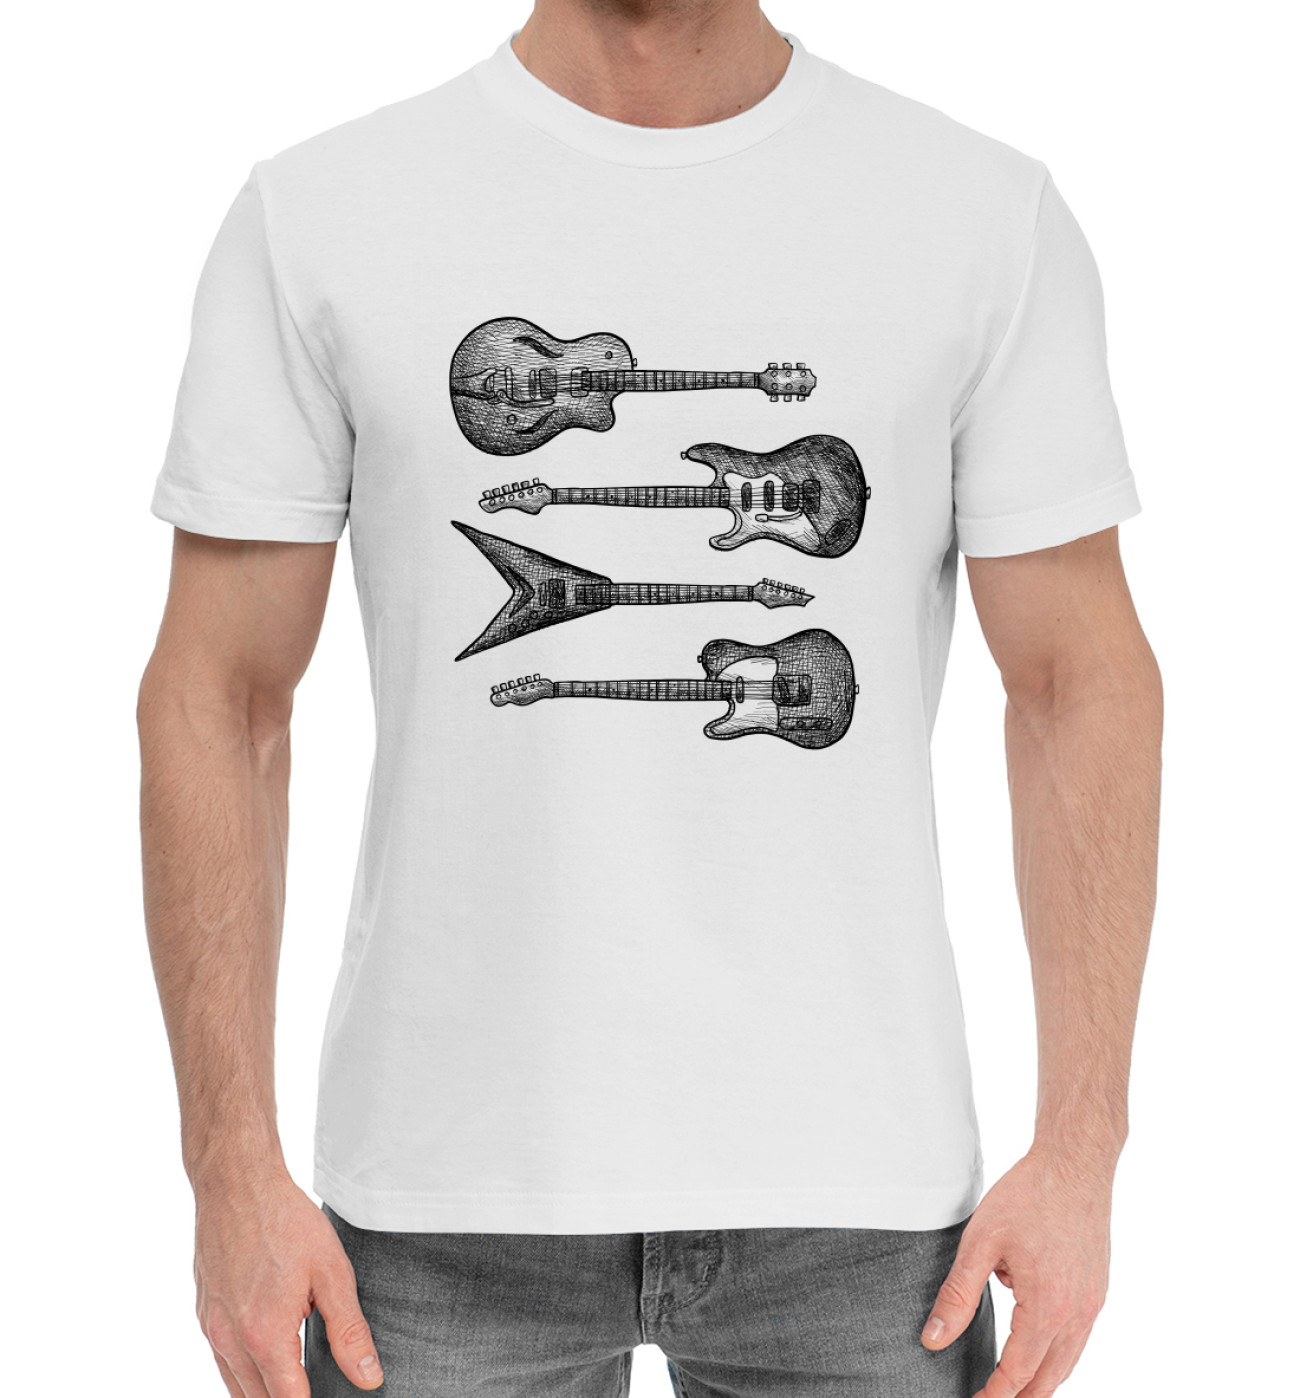 Мужская Хлопковая футболка Гитары, артикул: MZK-764858-hfu-2